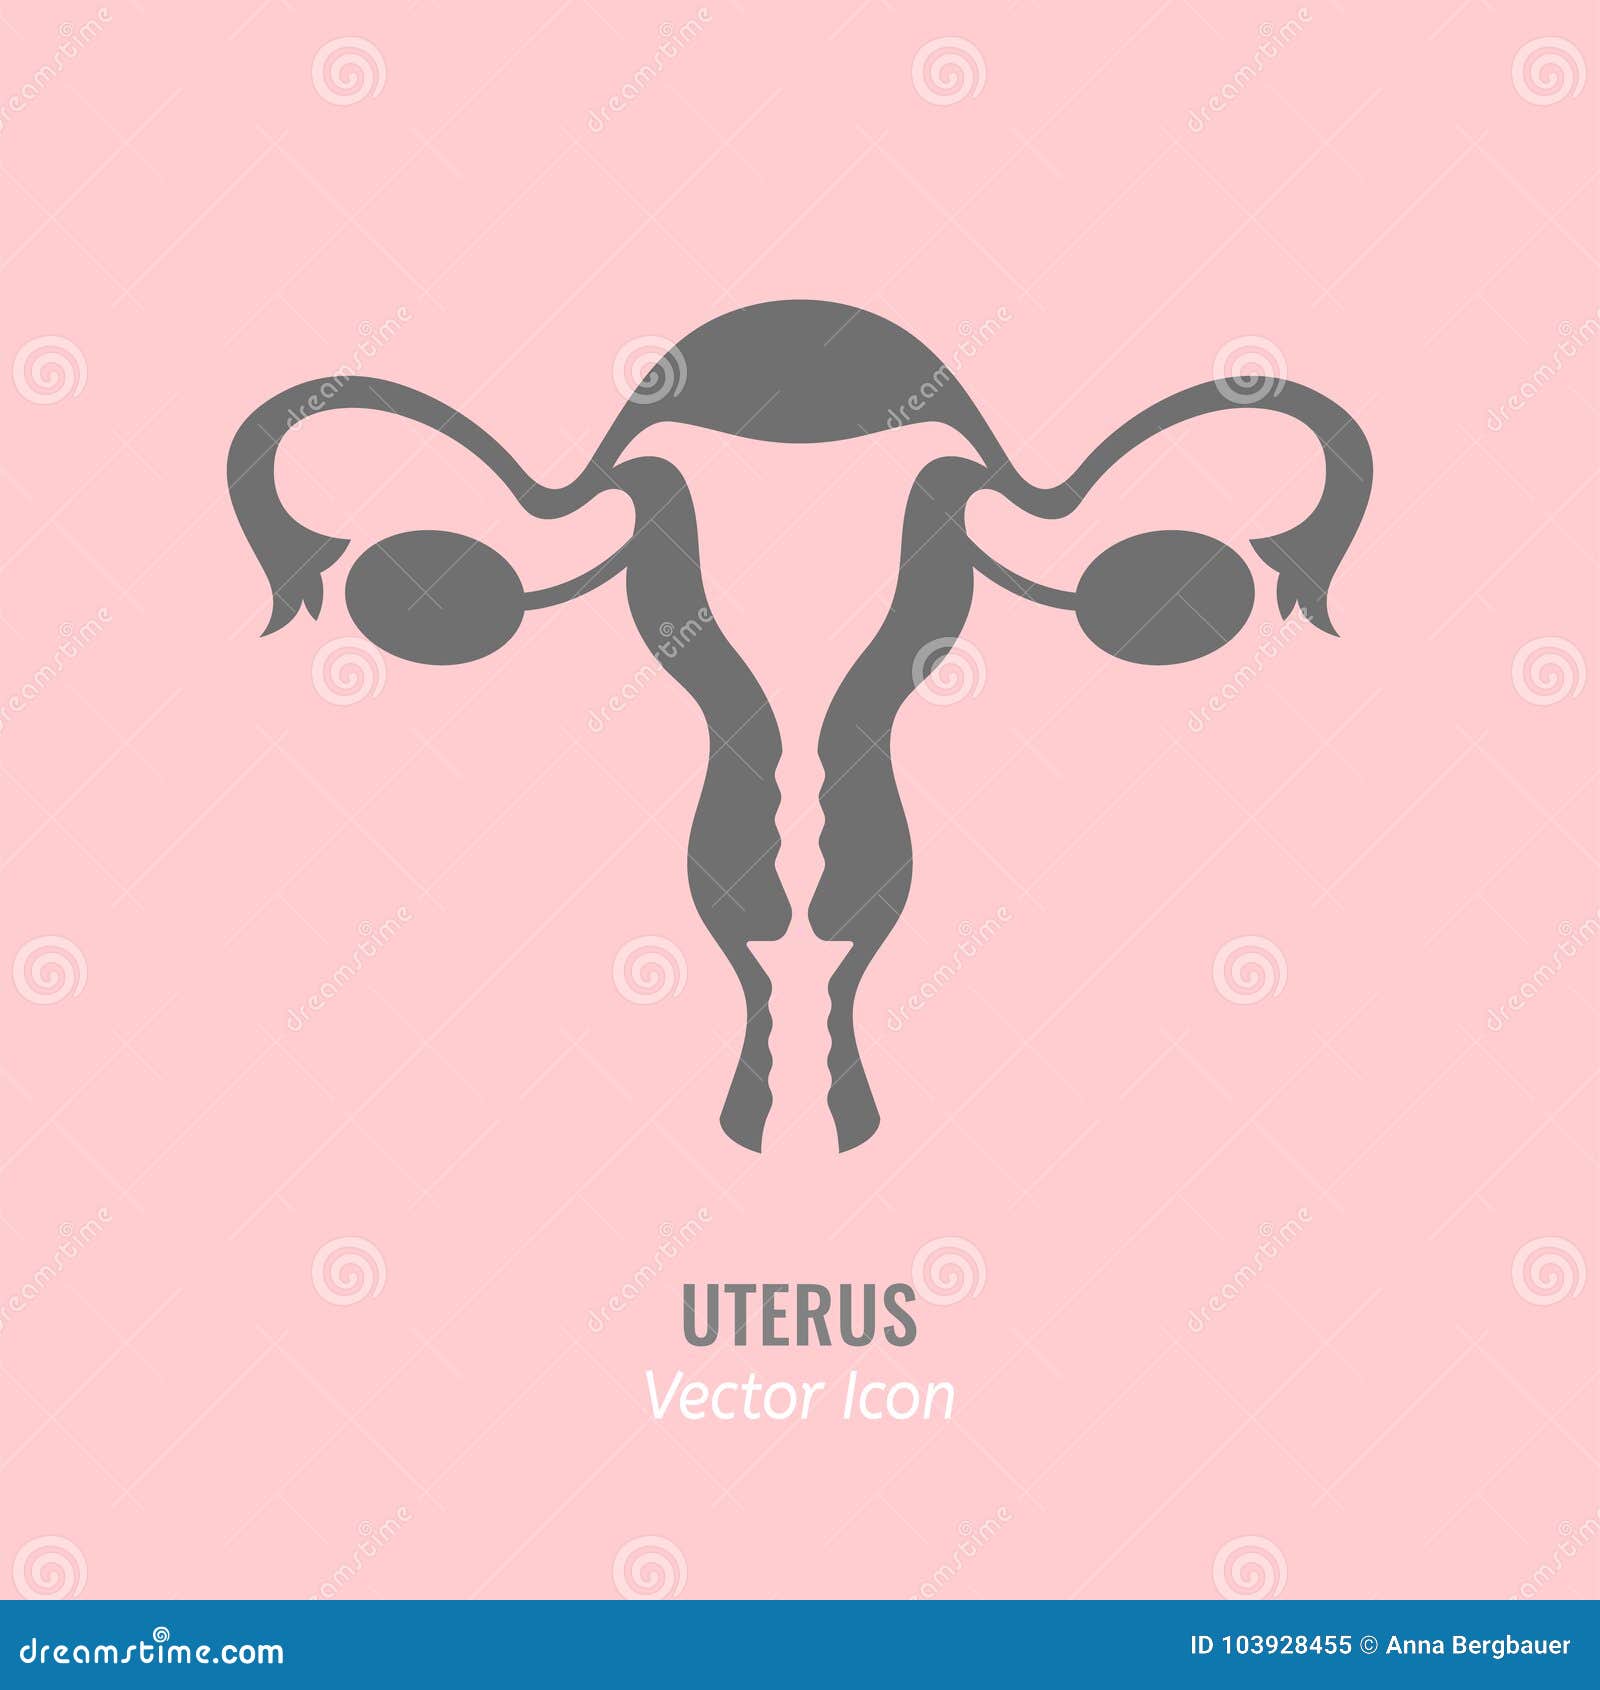 Uterus vector icon stock vector. Illustration of element - 103928455